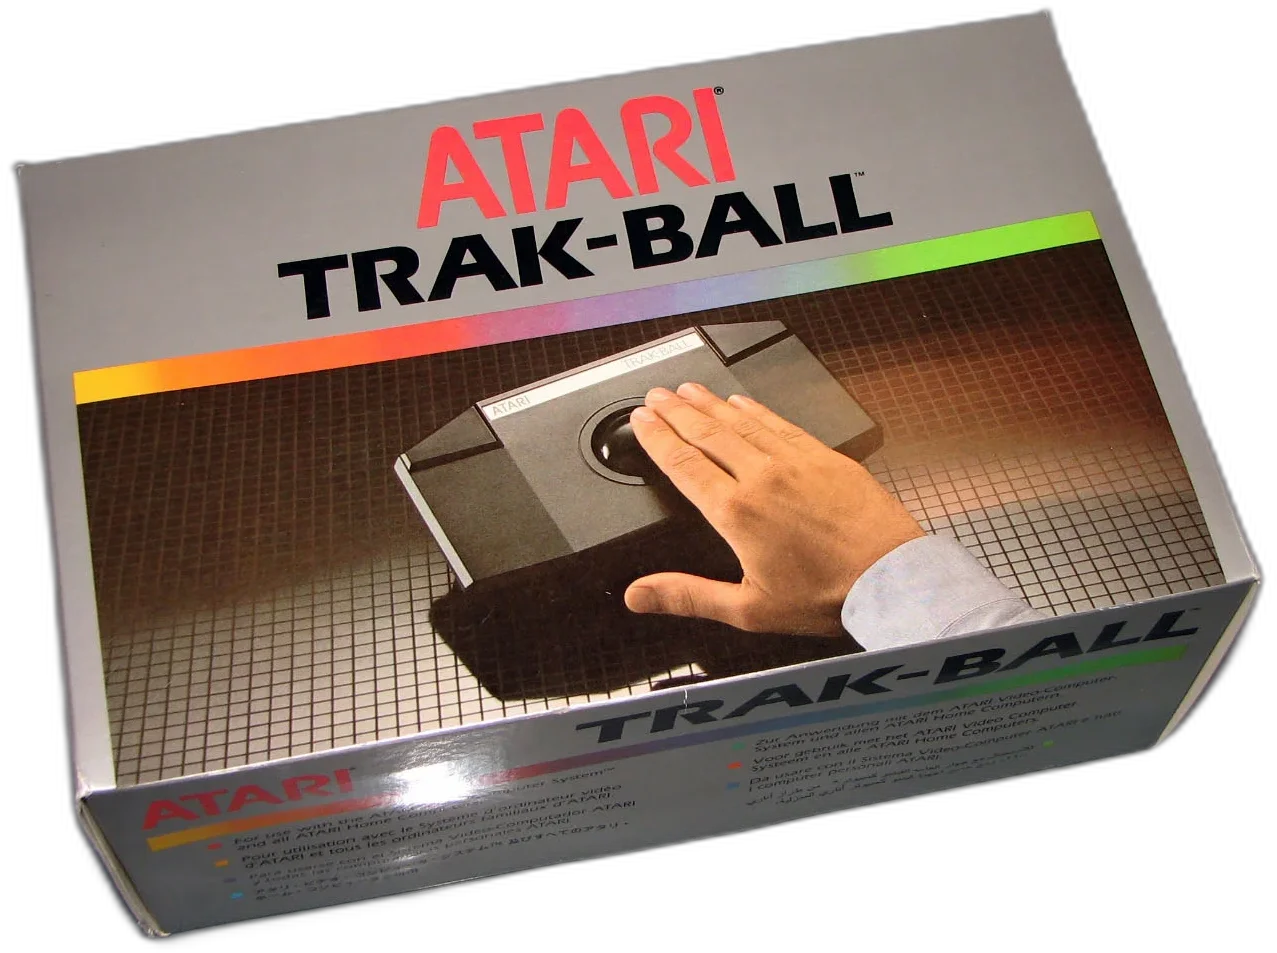  Atari 2600 Trak-Ball Controller